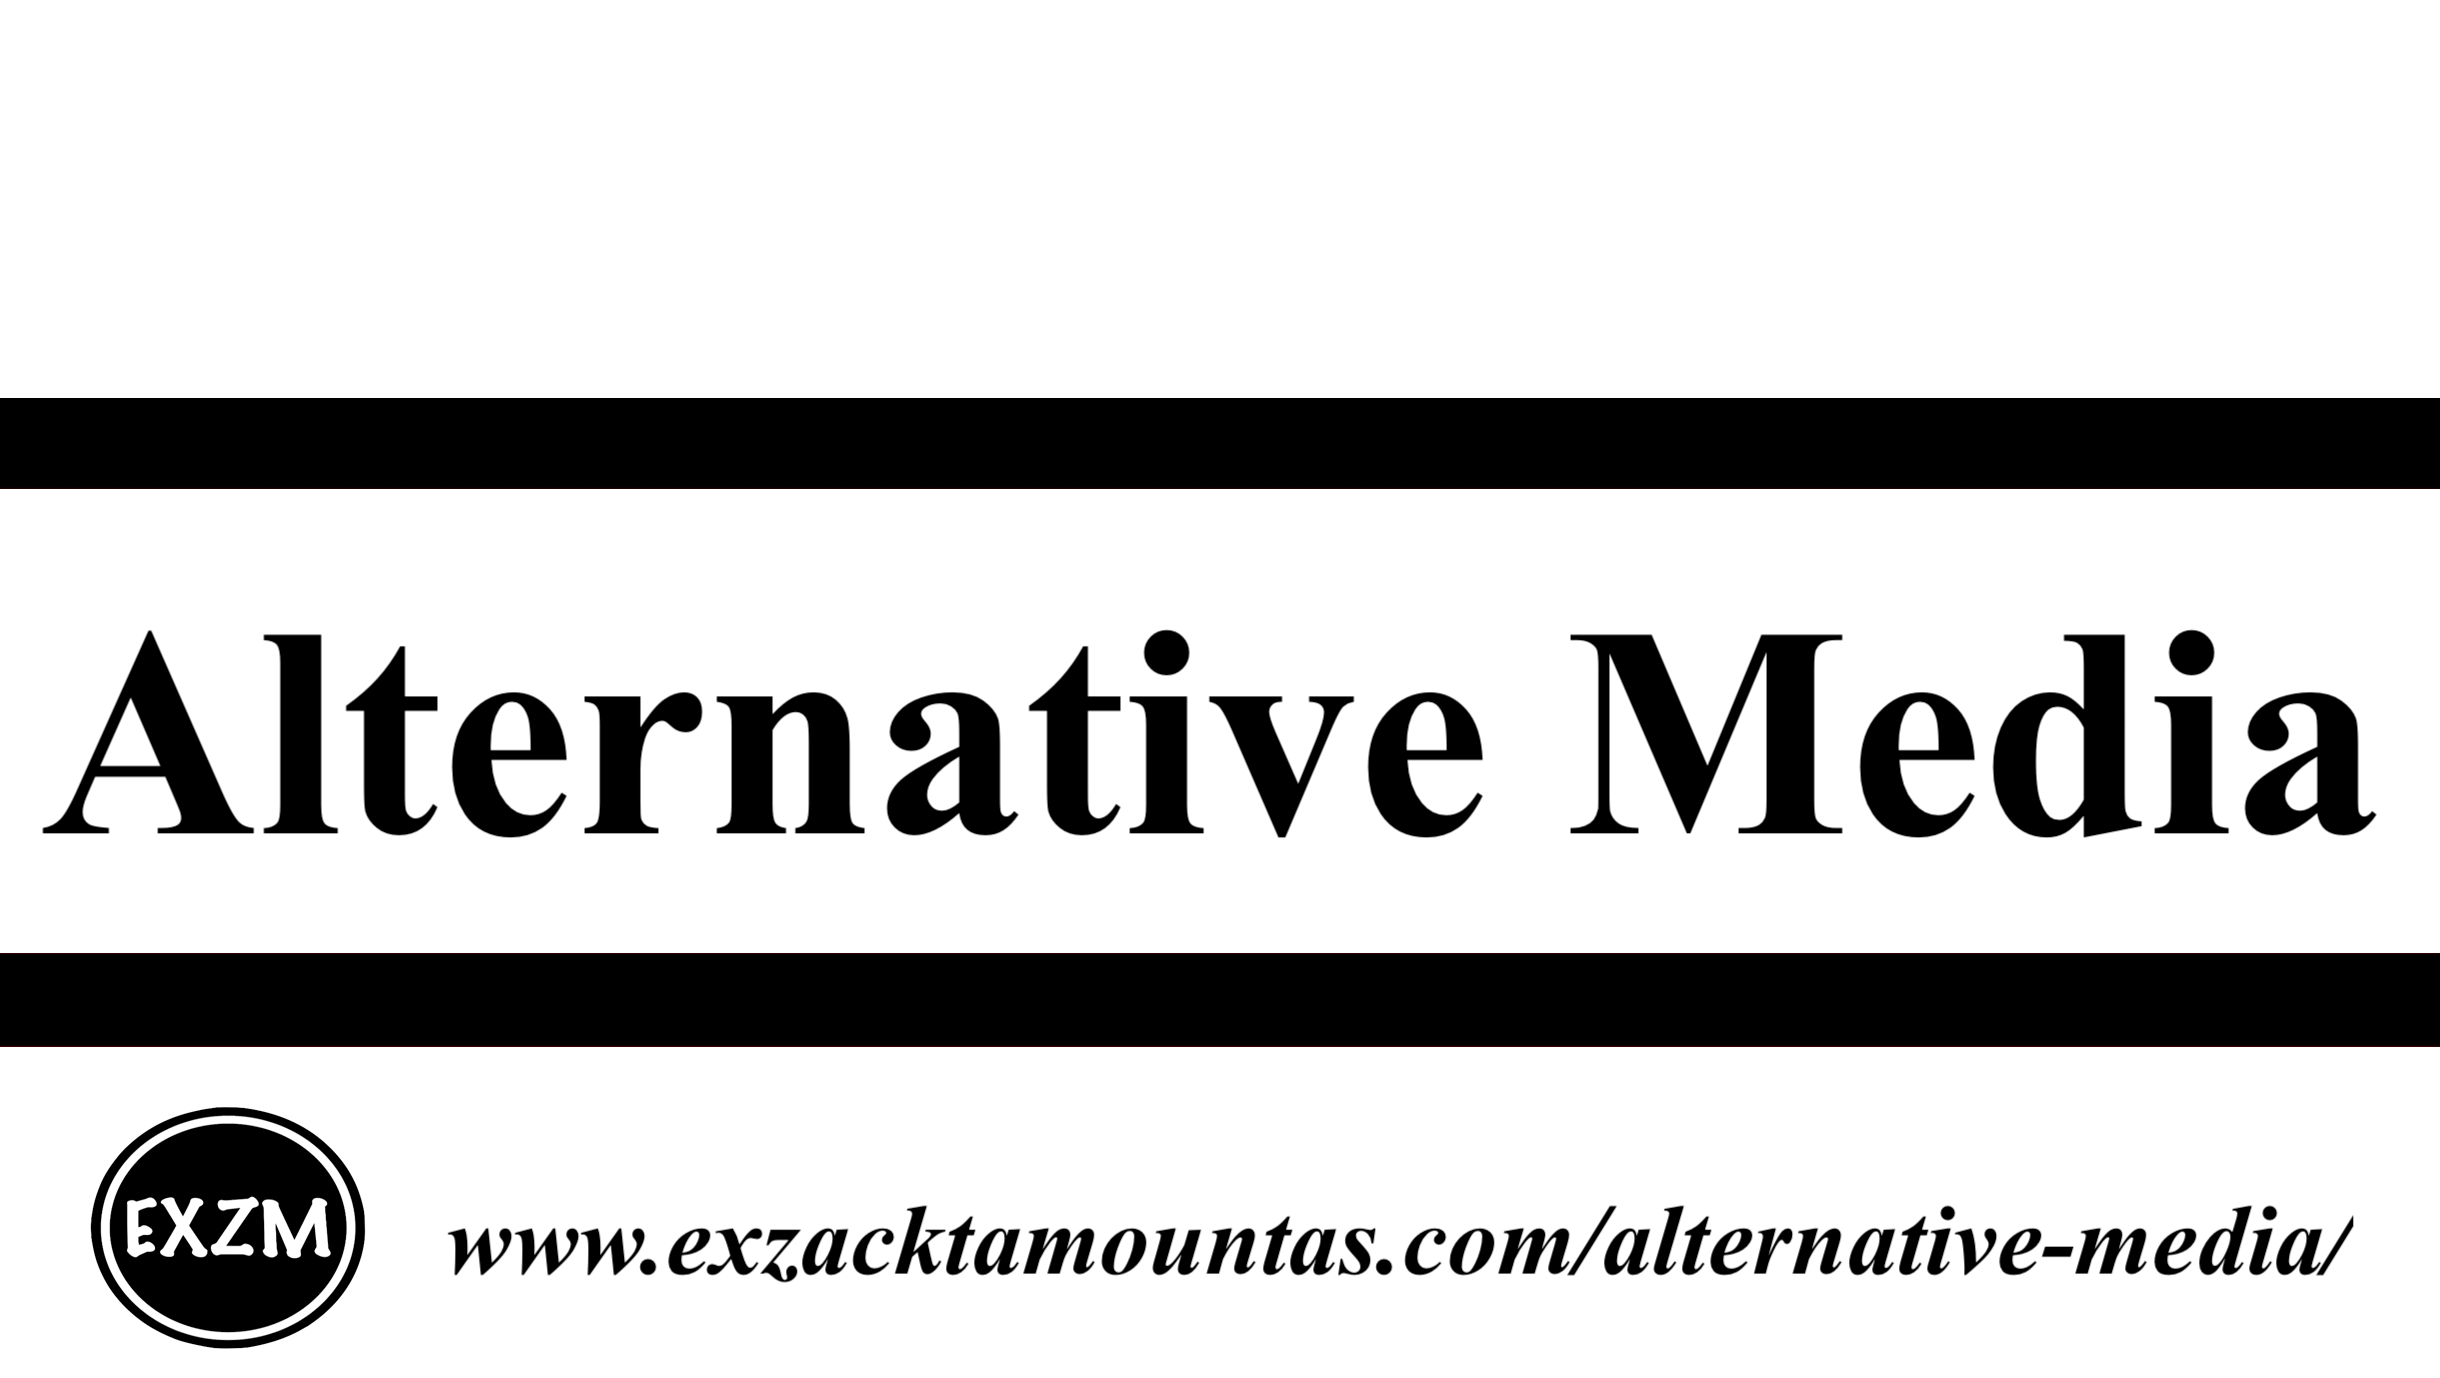 Alternative Media EXZM 9 30 2019